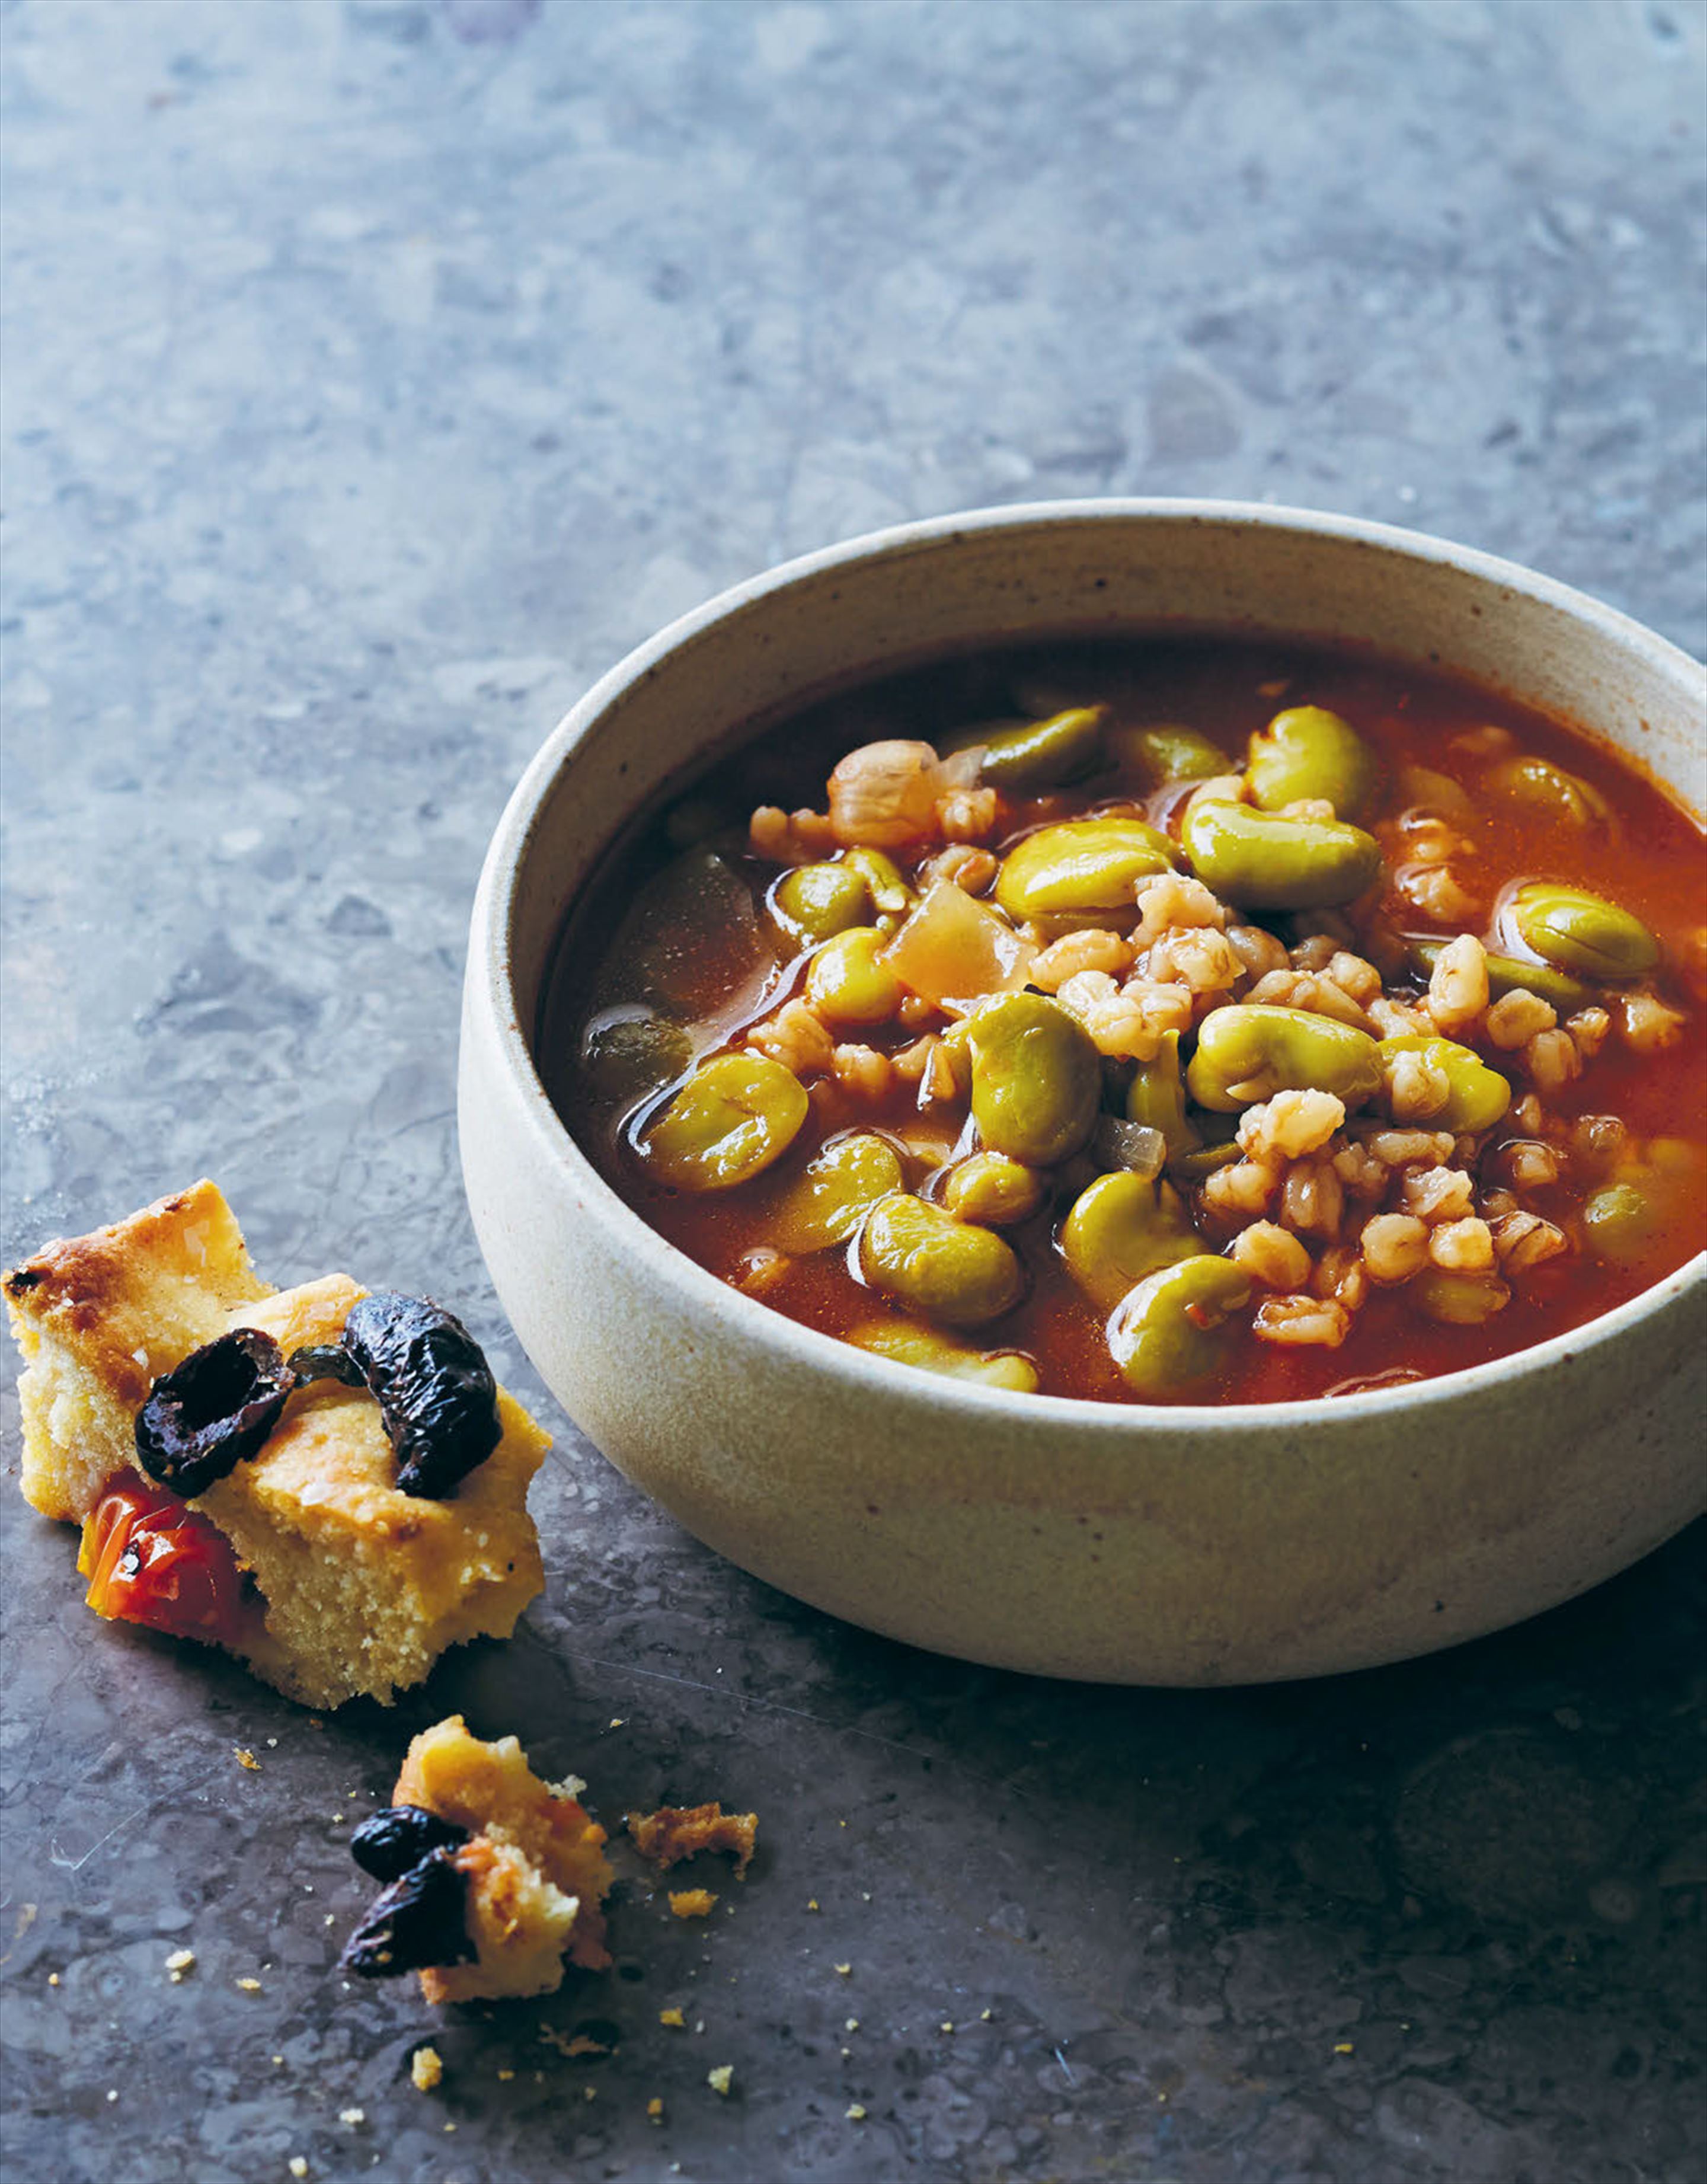 Broad bean soup